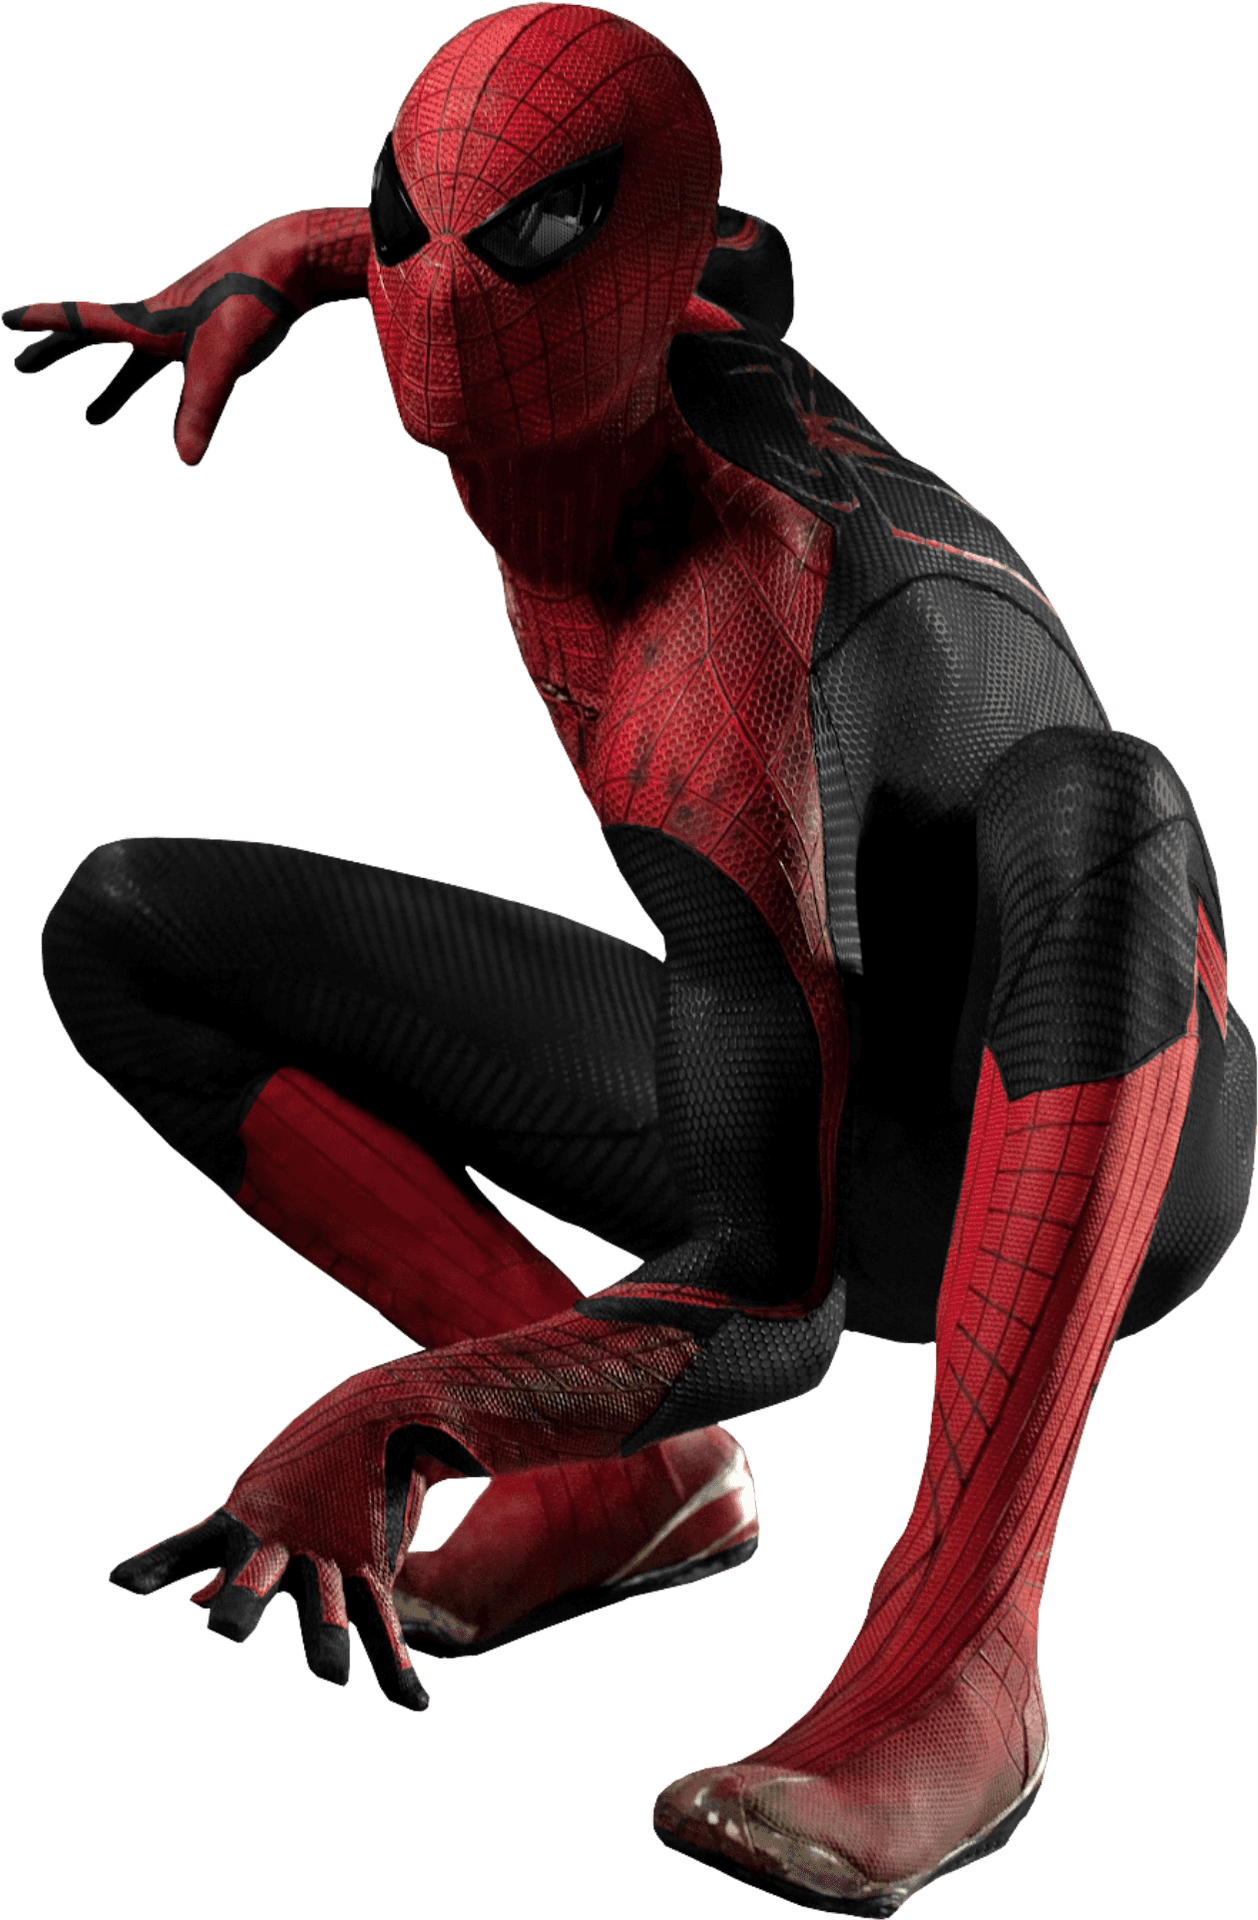 Spider Man_ Crouching_ Pose PNG